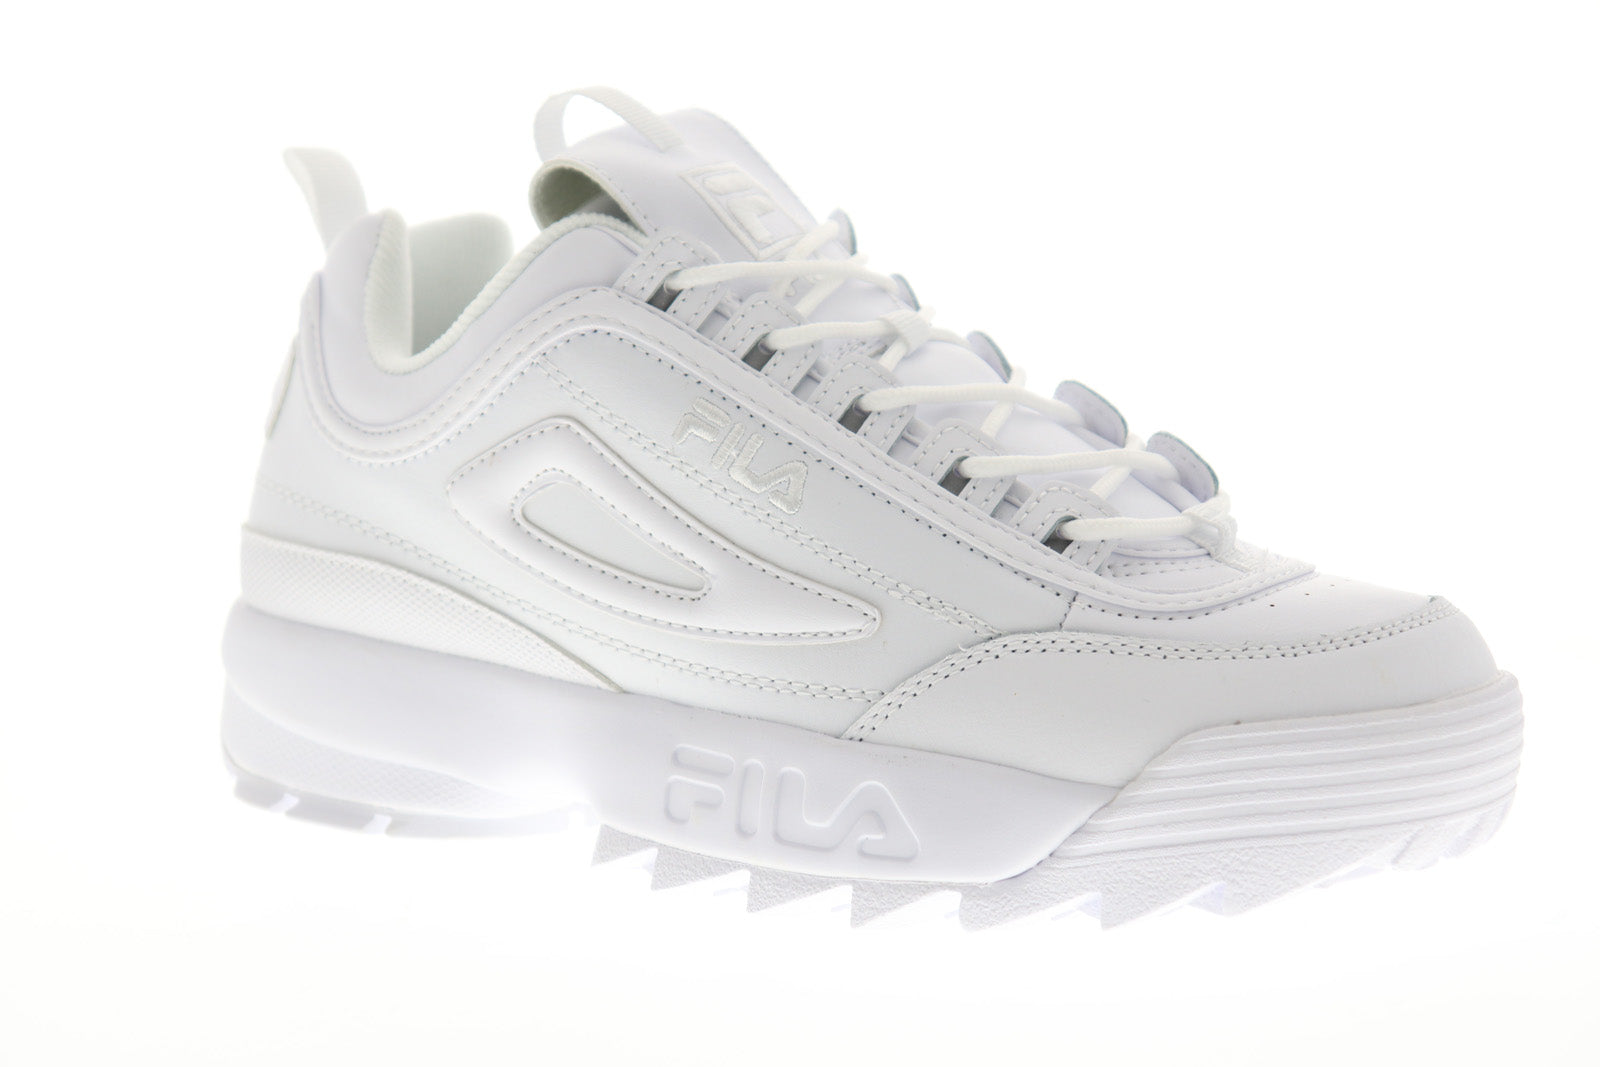 Fila Disruptor II Premium Mens White Leather Casual Lifestyle Sneakers ...